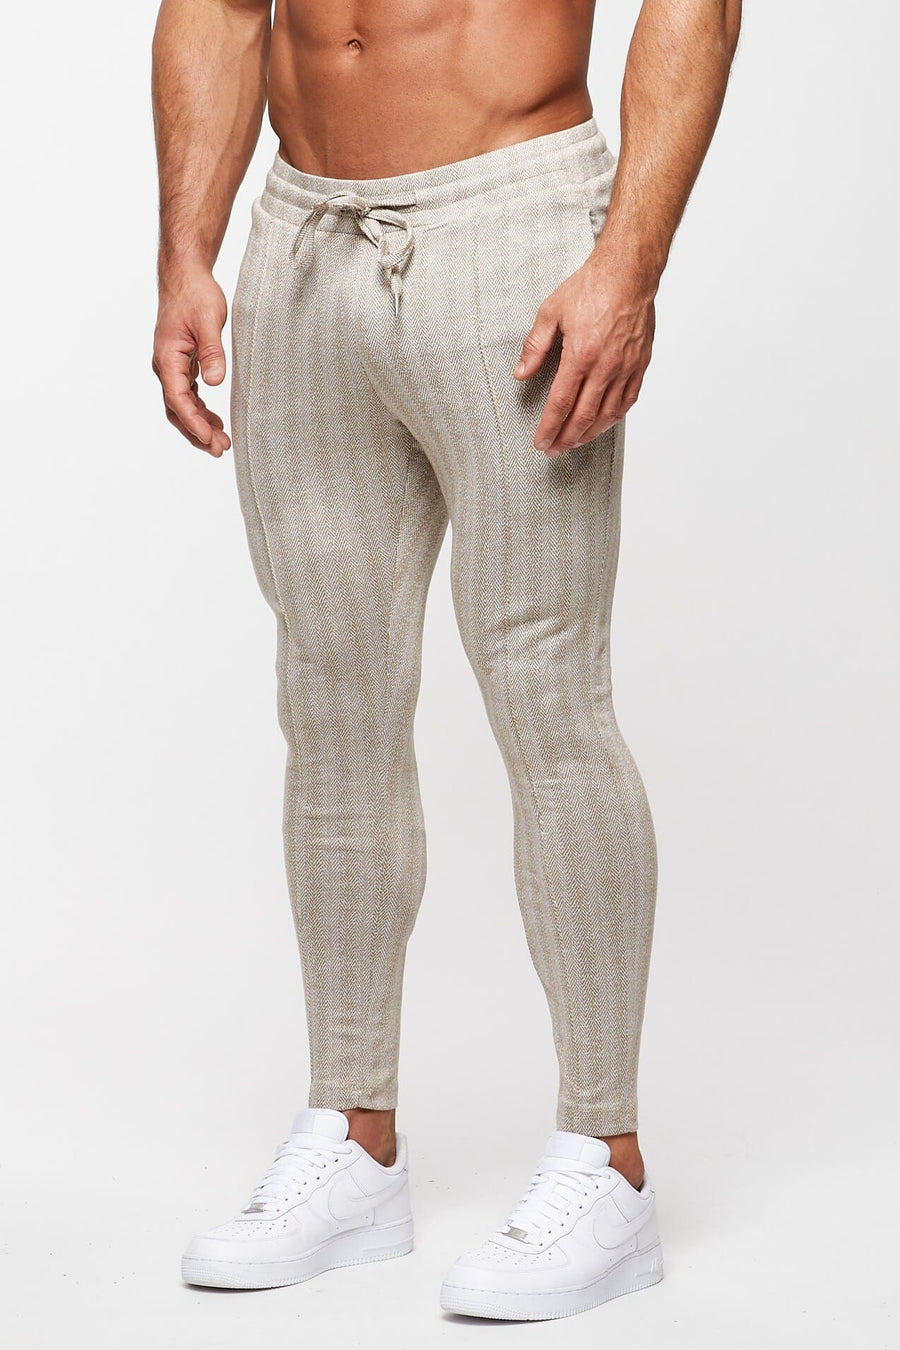 Legend London Trousers SMART JOGGER PANT – TAUPE